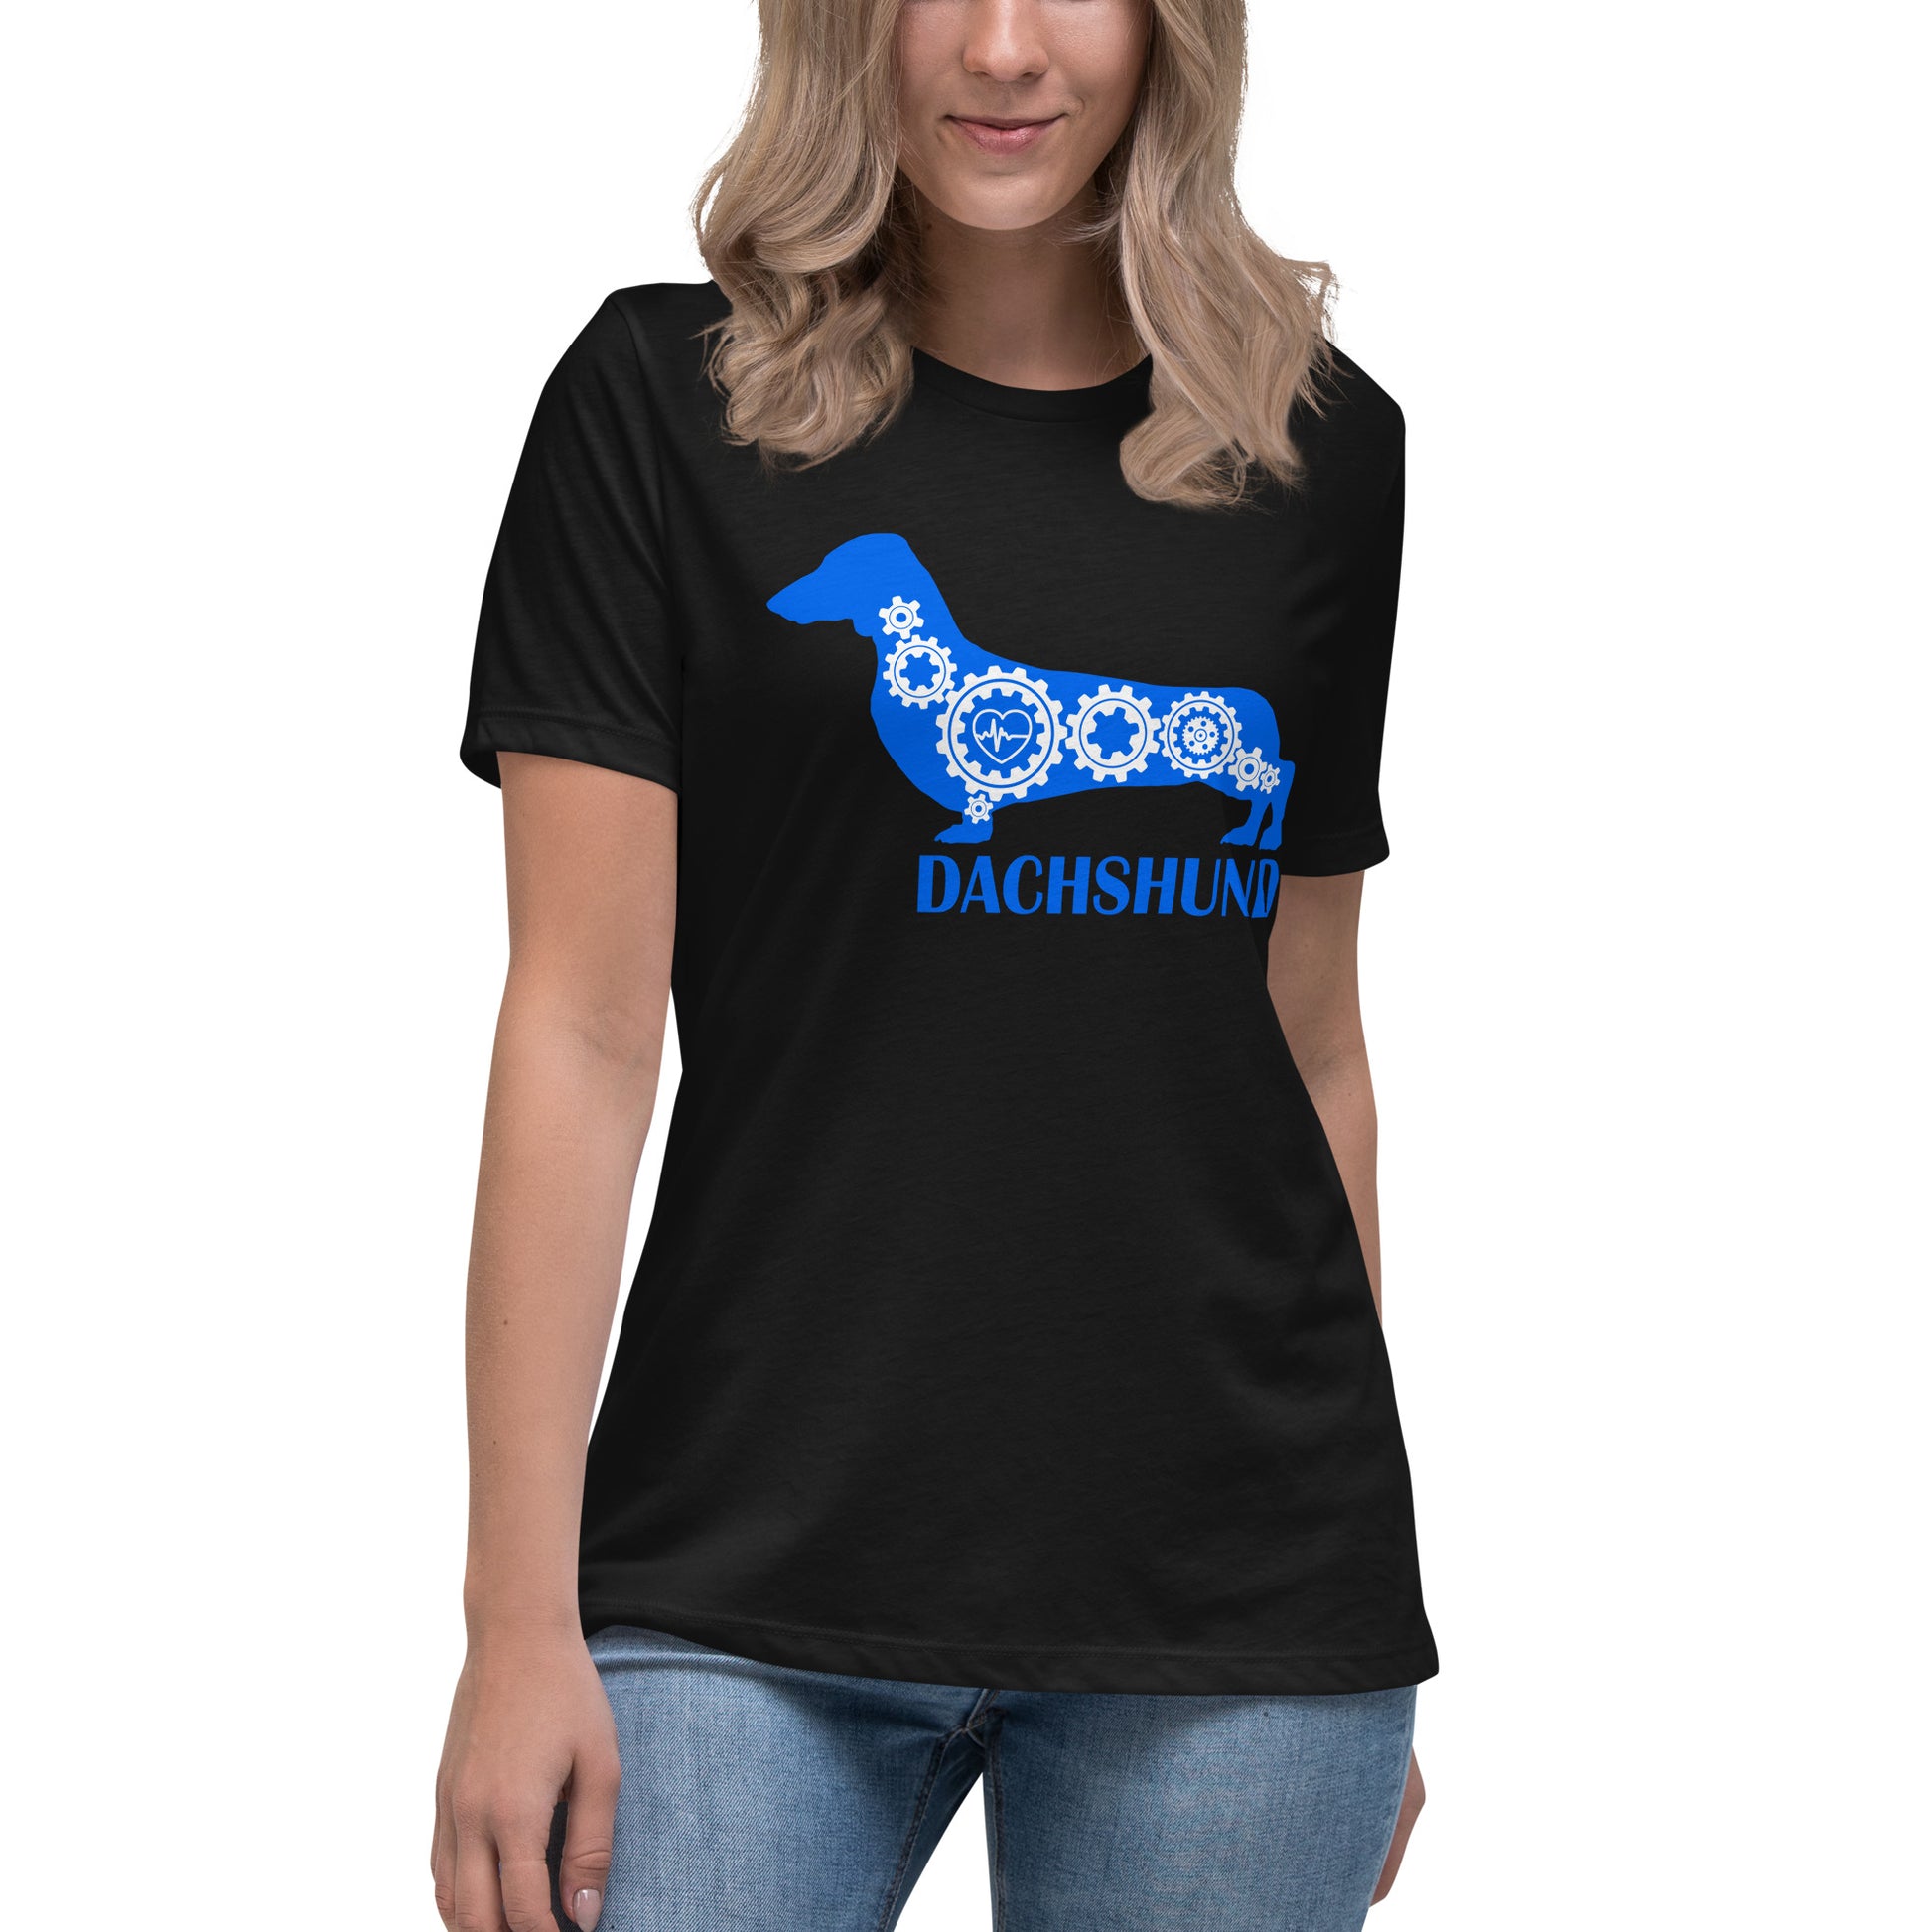 Dachshund Bionic women’s black t-shirt by Dog Artistry.